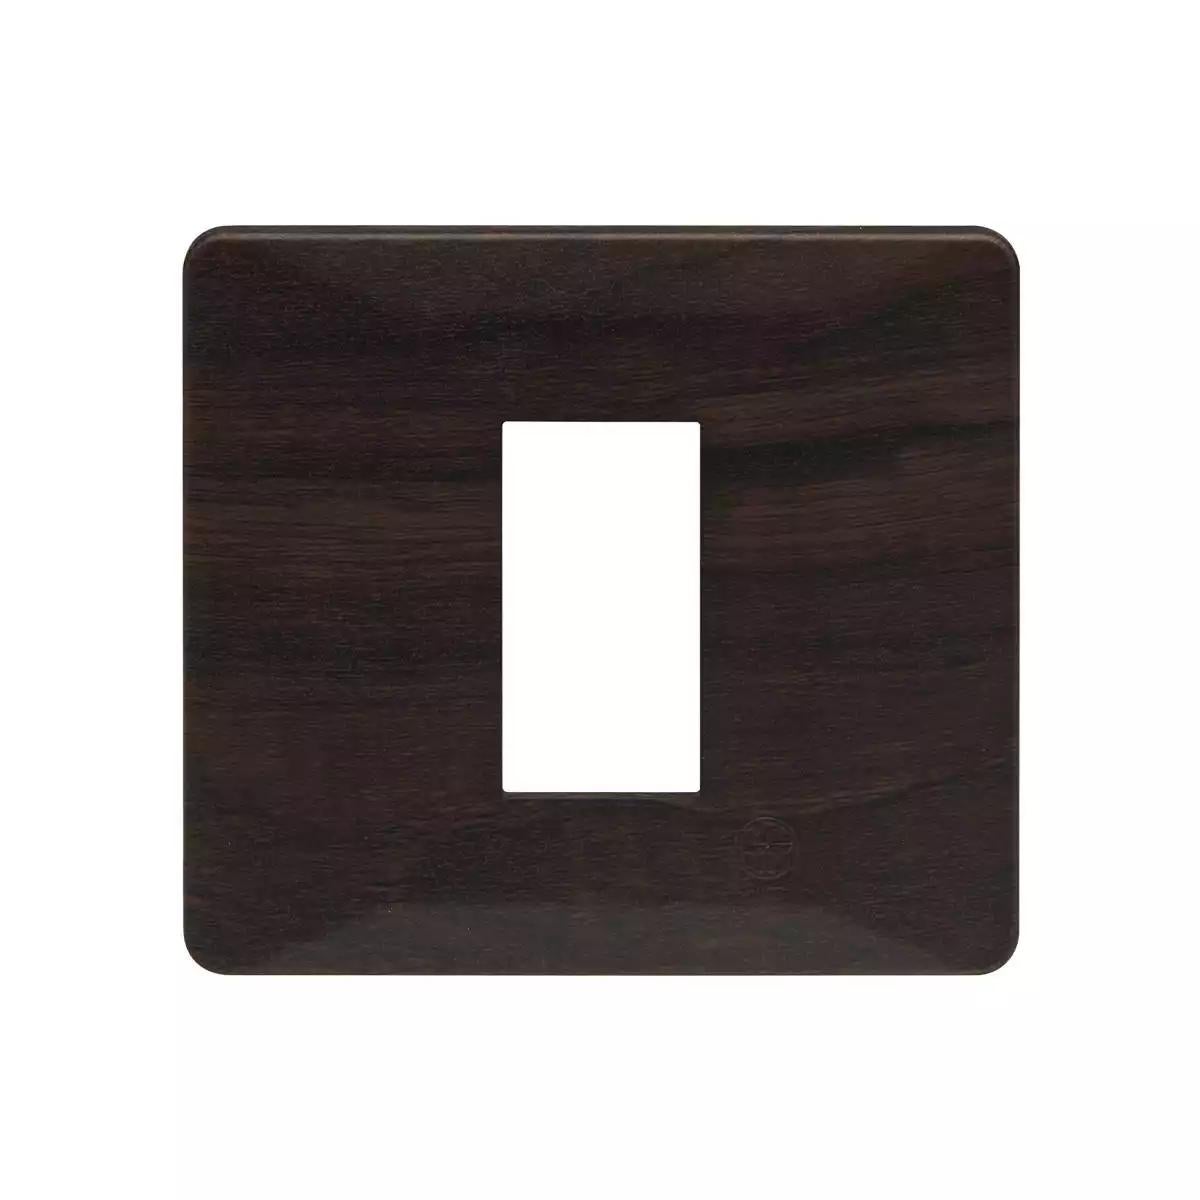 entice 3 module plate- Dark Chocolate Wood